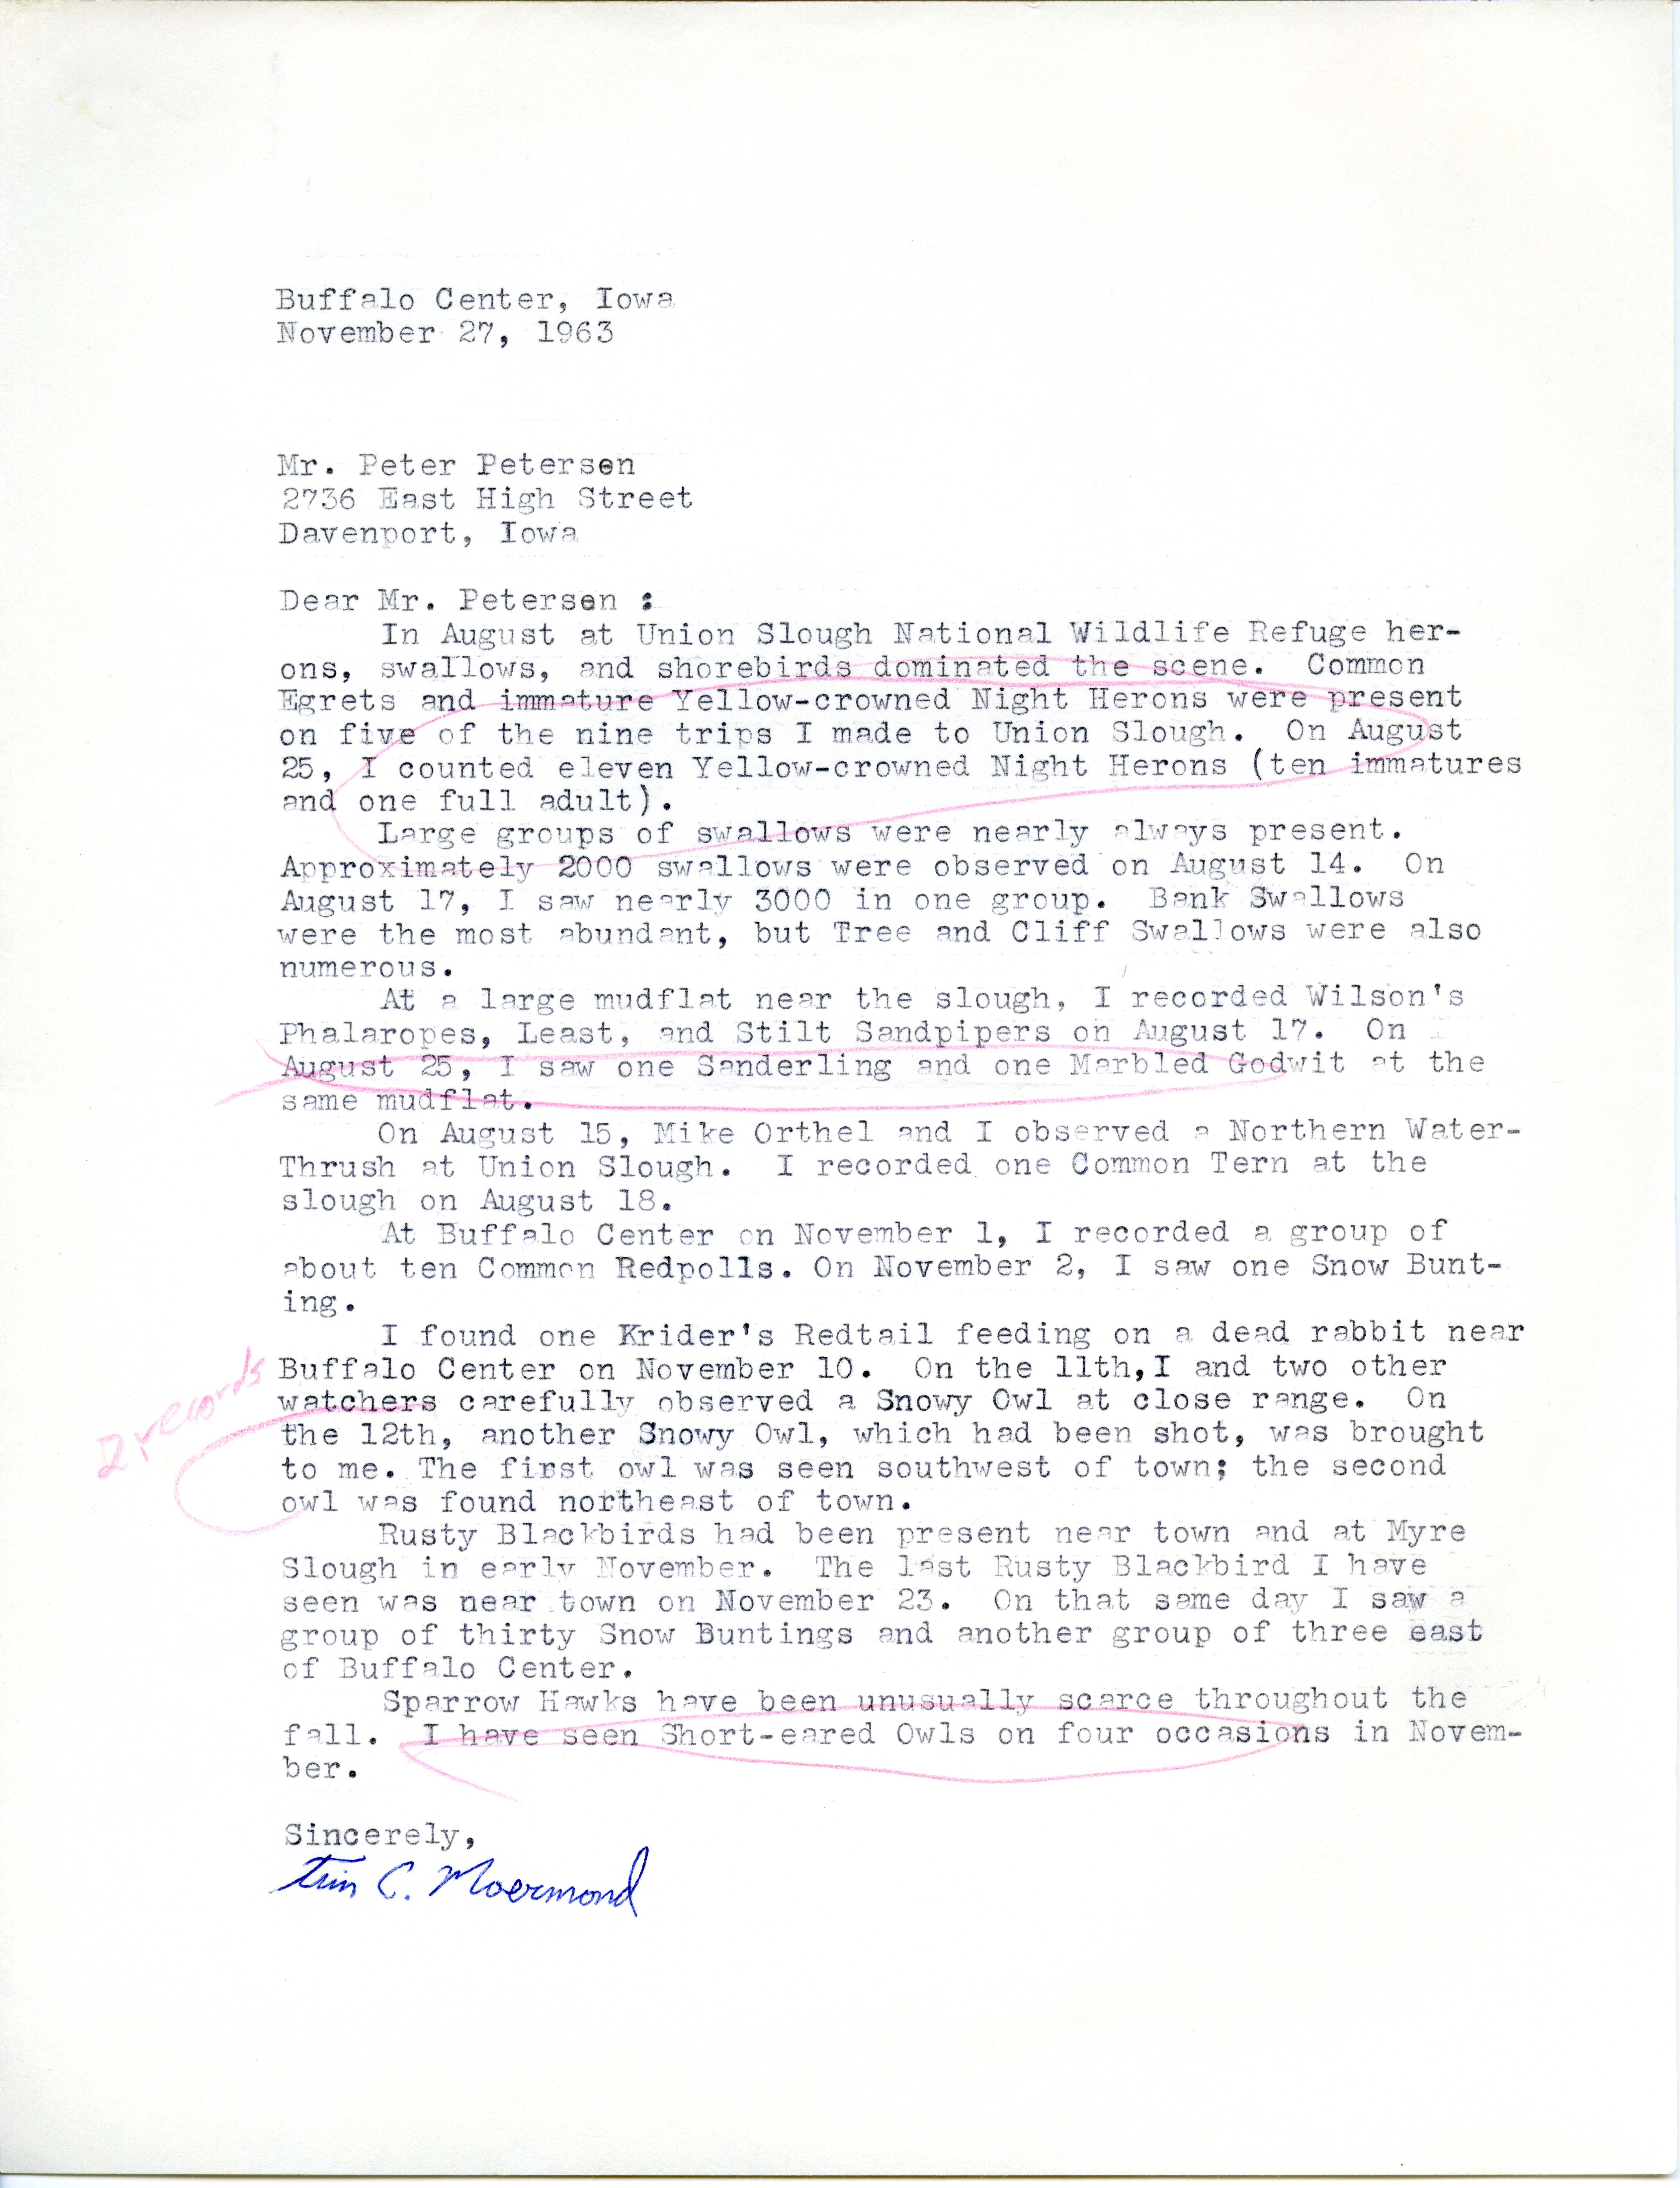 Tim C. Moermond letter to Peter C. Petersen regarding field notes, November 27, 1963